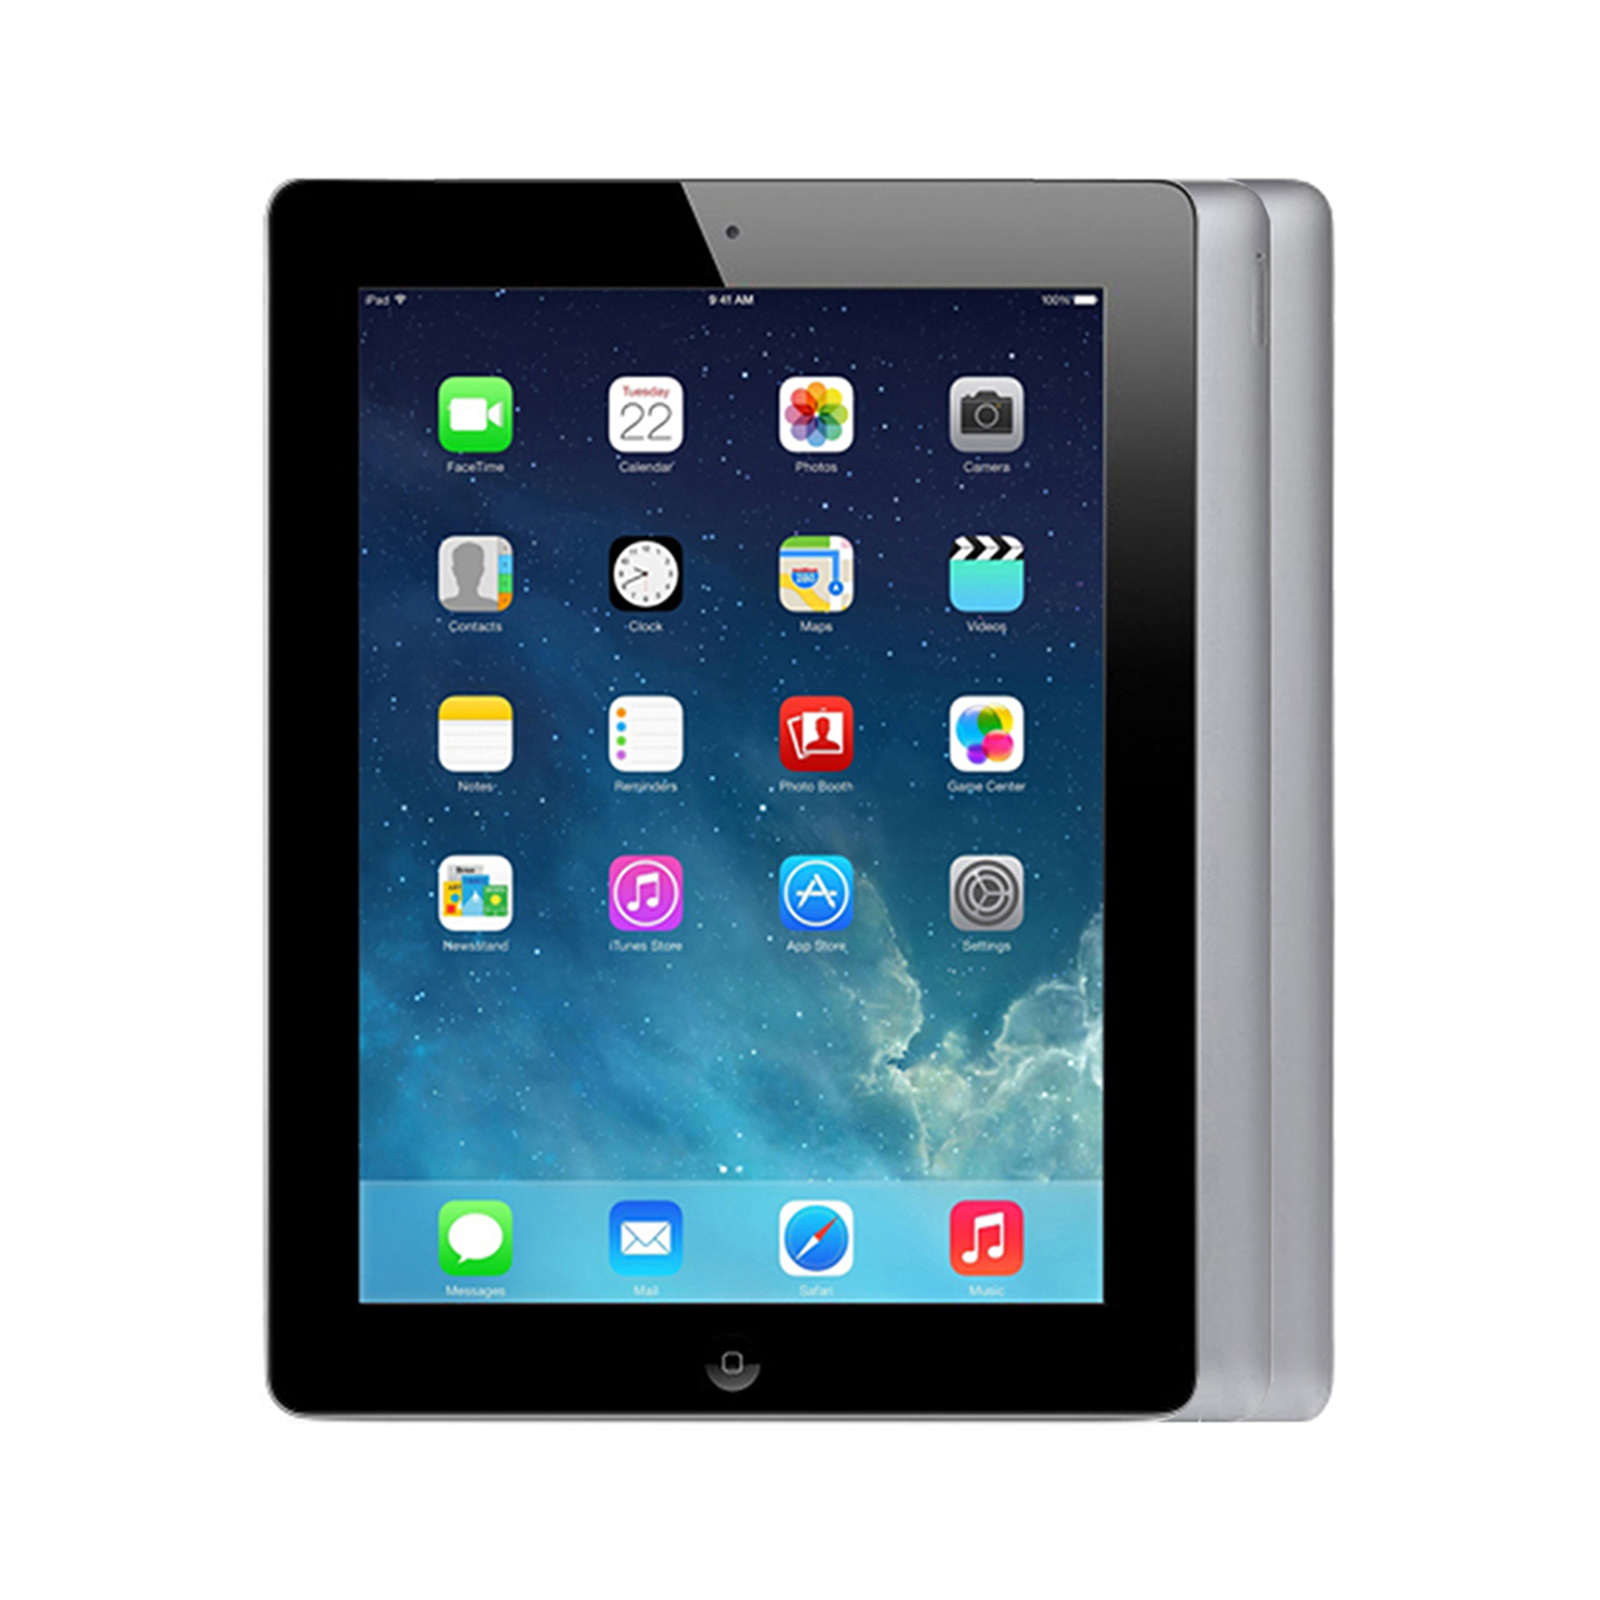 (Refurbished) Apple iPad 4th Generation A1460 Wi-Fi + Cellular 64GB 9.7" - Silver (MD522LL)